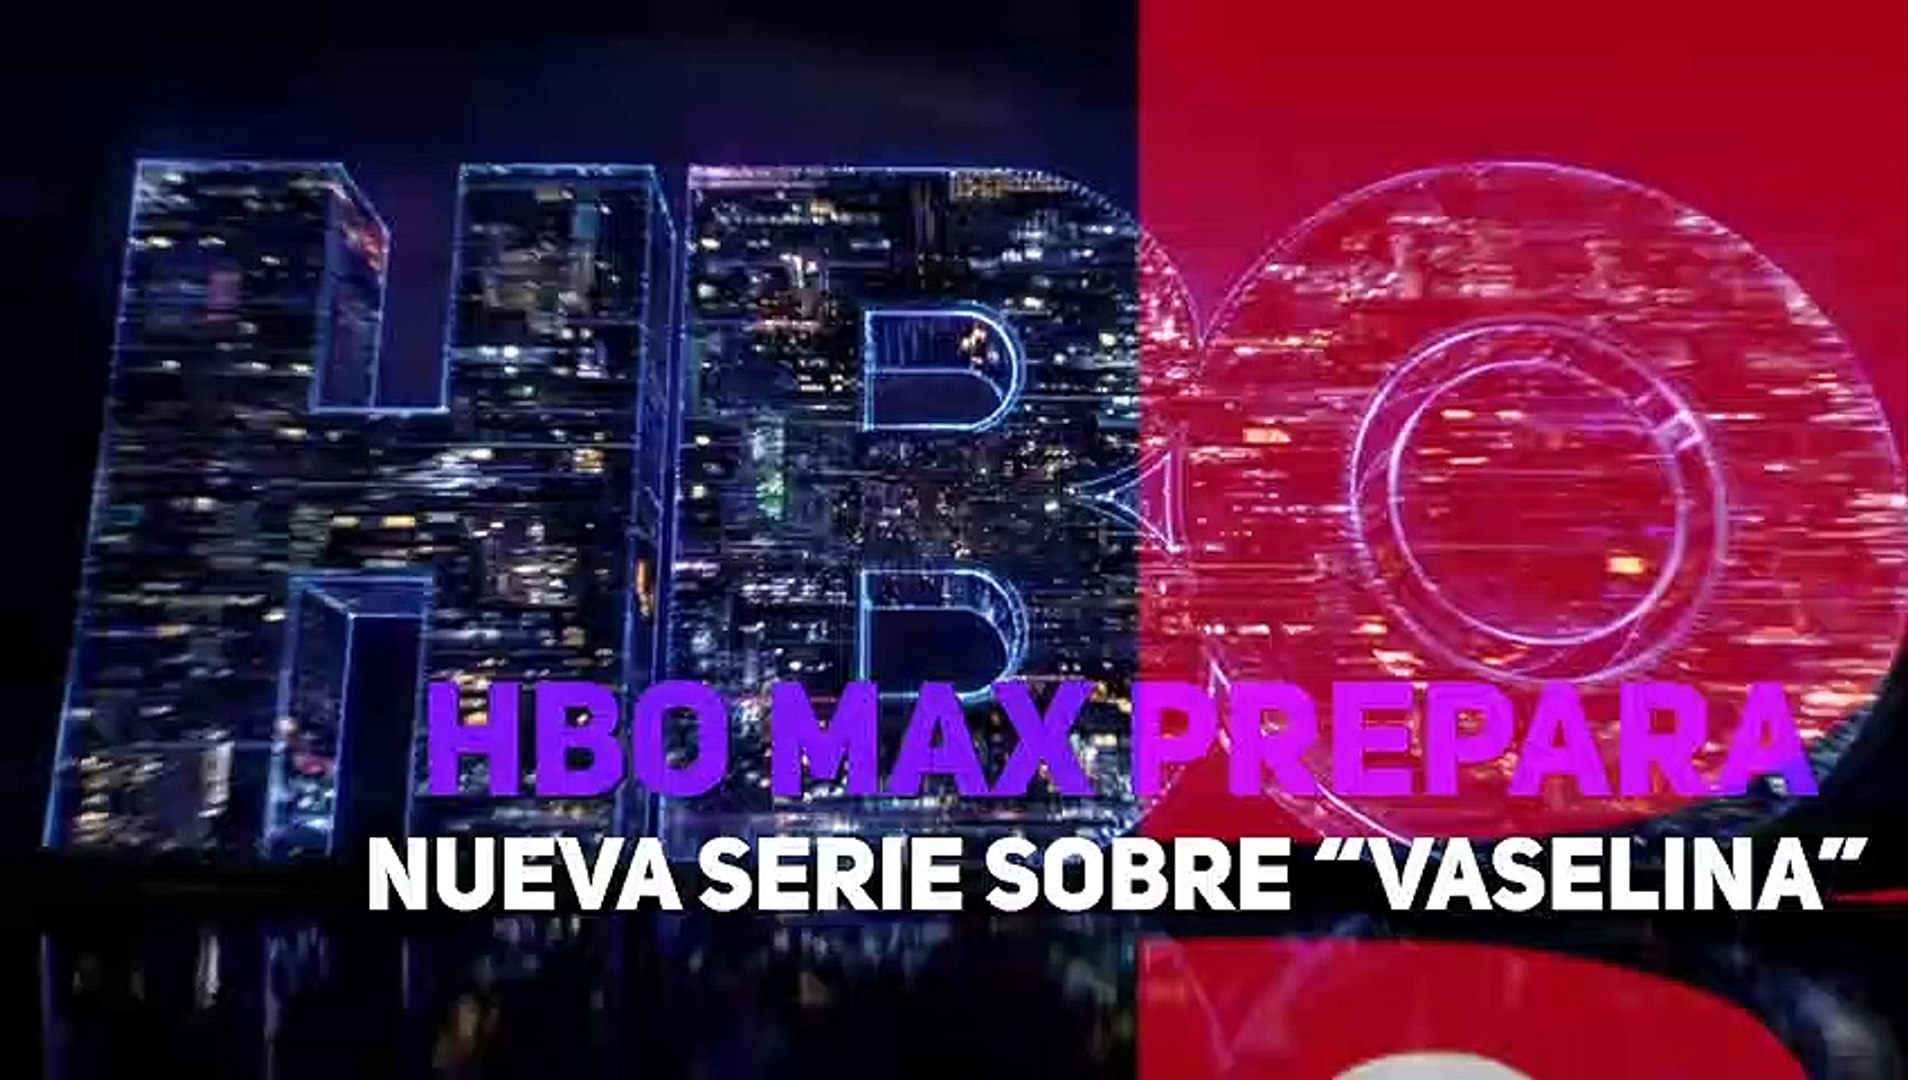 HBO Max prepara nueva serie sobre “Vaselina”